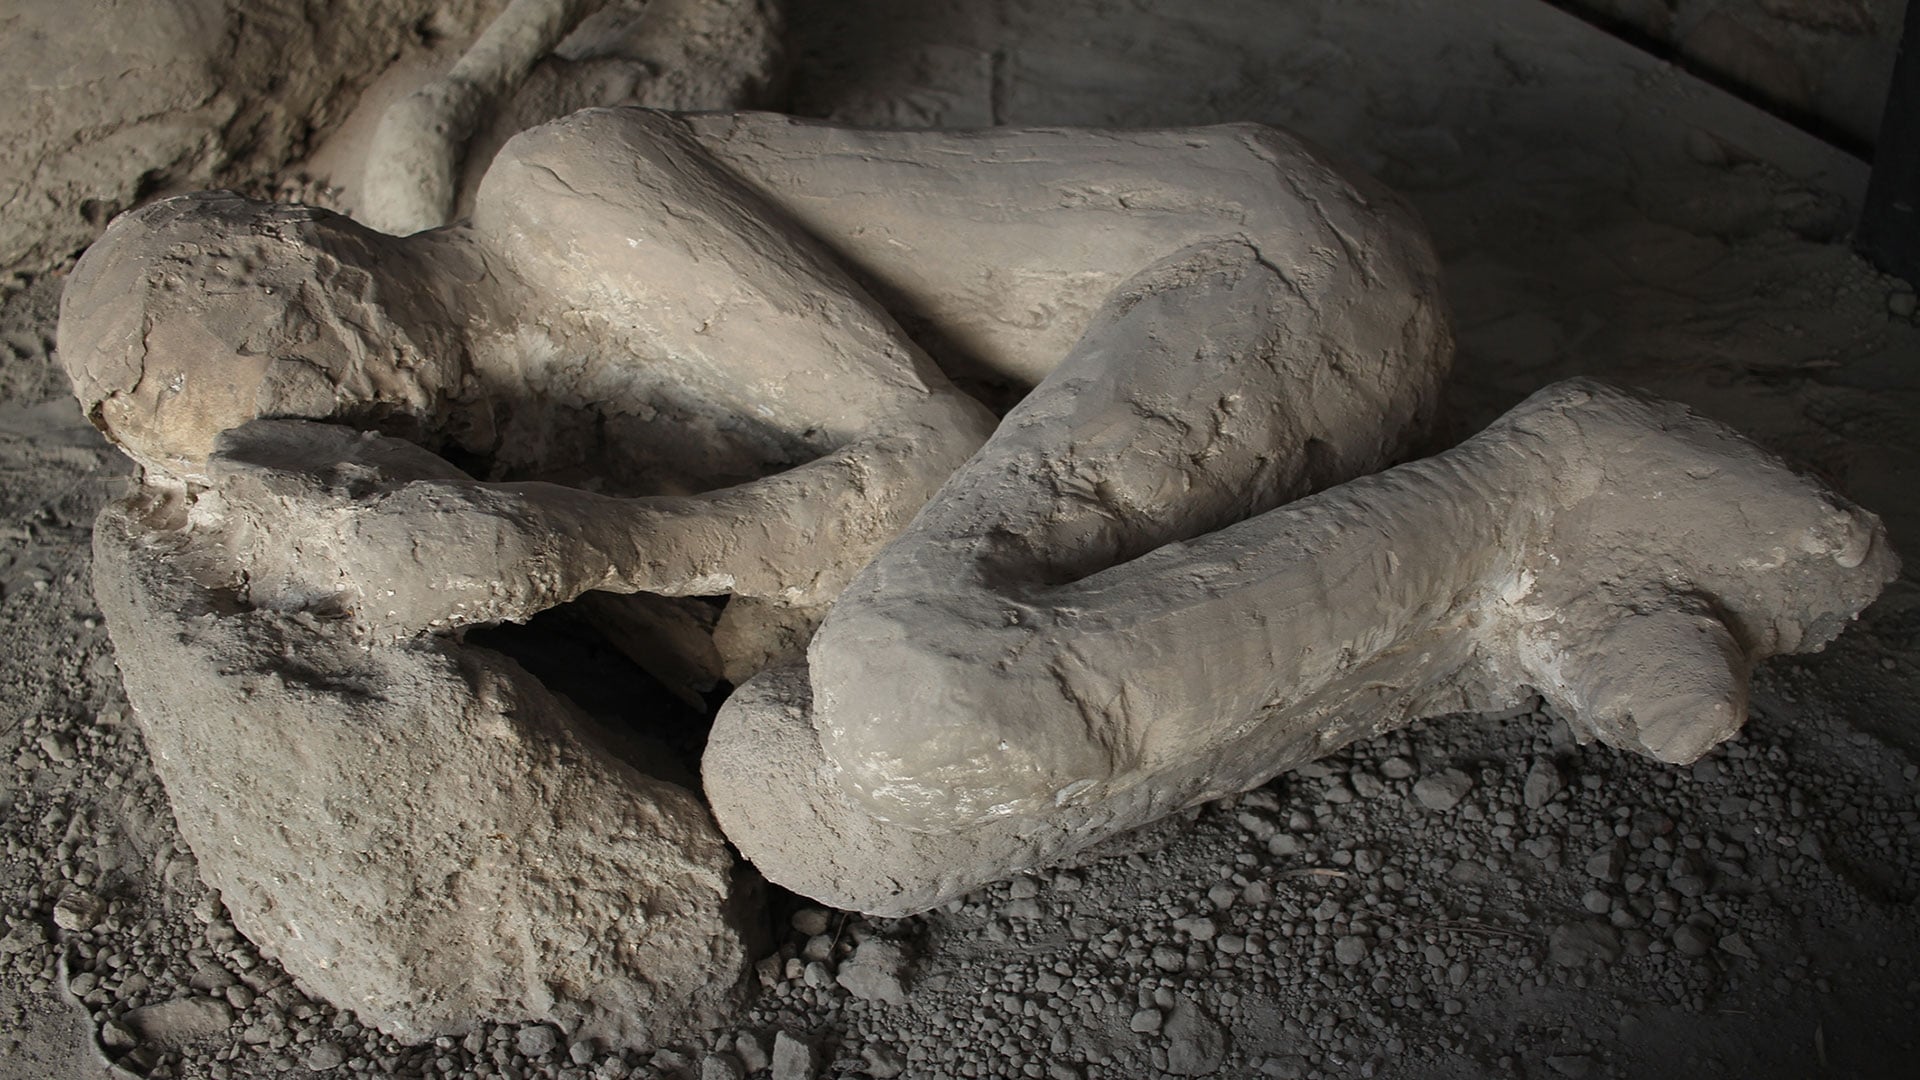 Pompeii: Secrets of the Dead